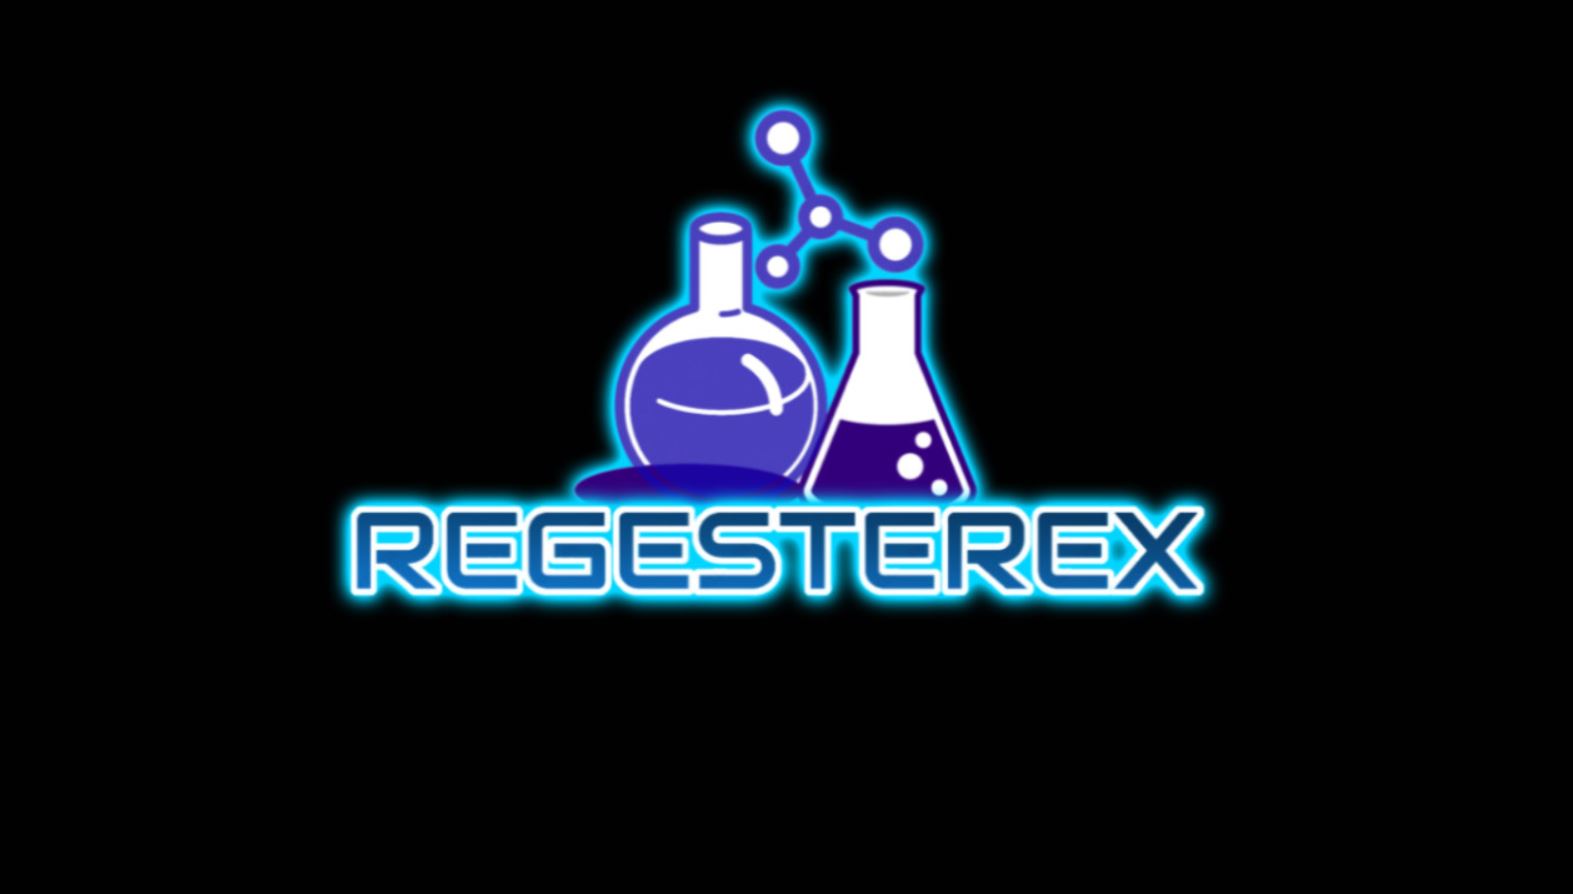 Regesterex porn xxx game download cover